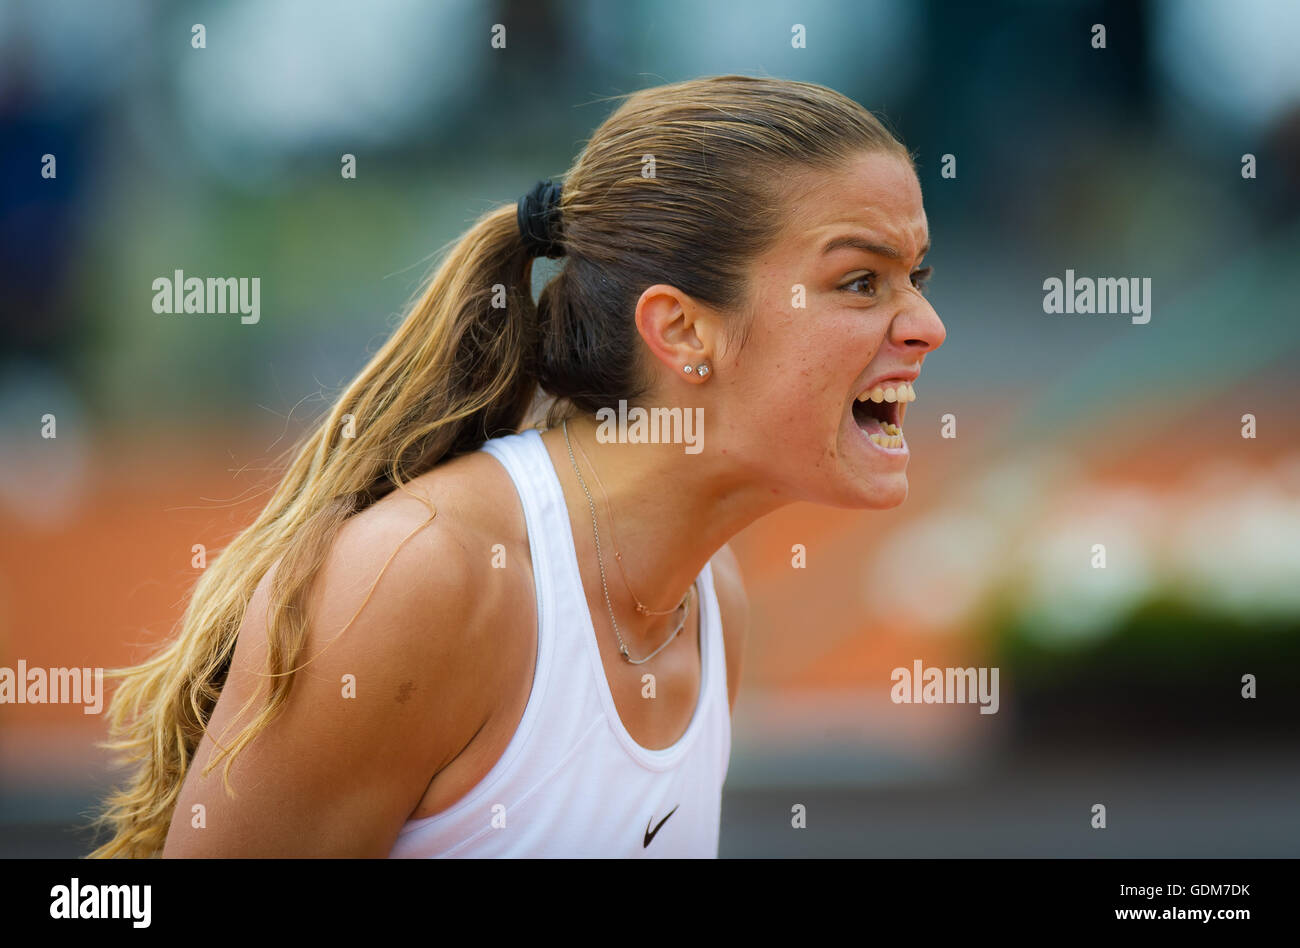 Bastad, Sweden. 18 July, 2016. Maria Sakkari in action at the 2016 Ericsson Open WTA International tennis tournament Credit:  Jimmie48 Photography/Alamy Live News Stock Photo